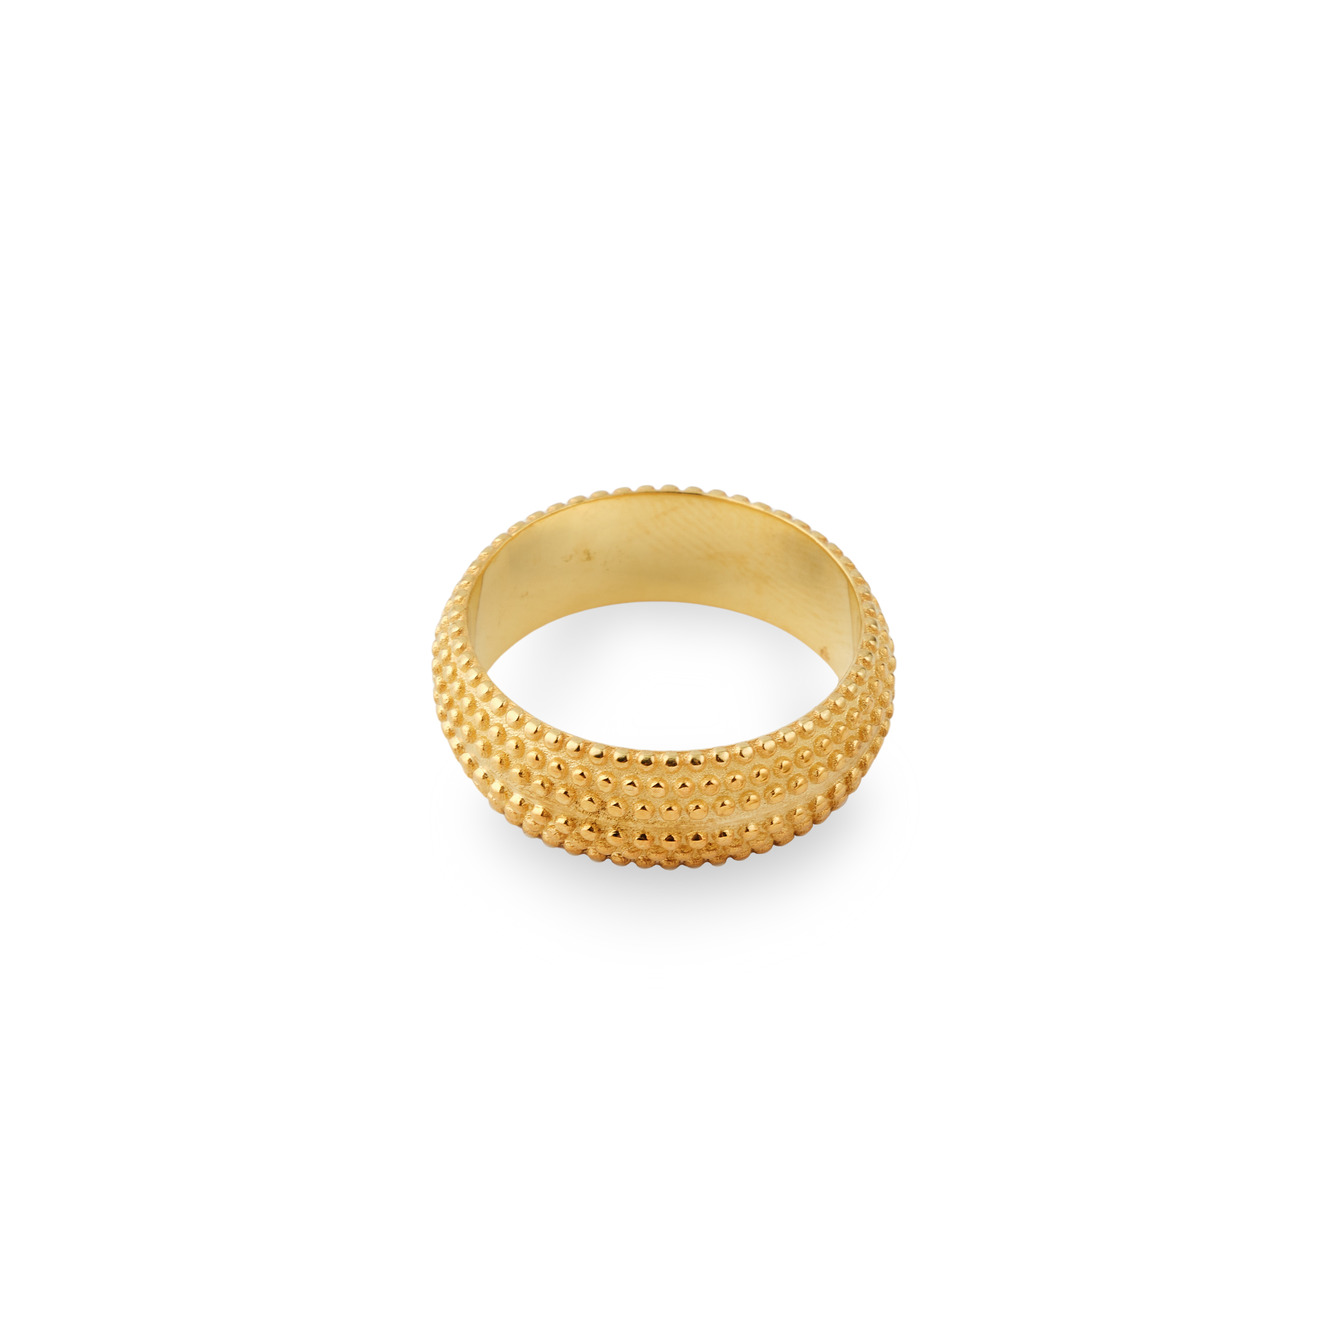 KRASHE jewellery Позолоченное кольцо «Золотые мурашки» krashe jewellery кольцо вороны москвички с цитринами и хризолитами